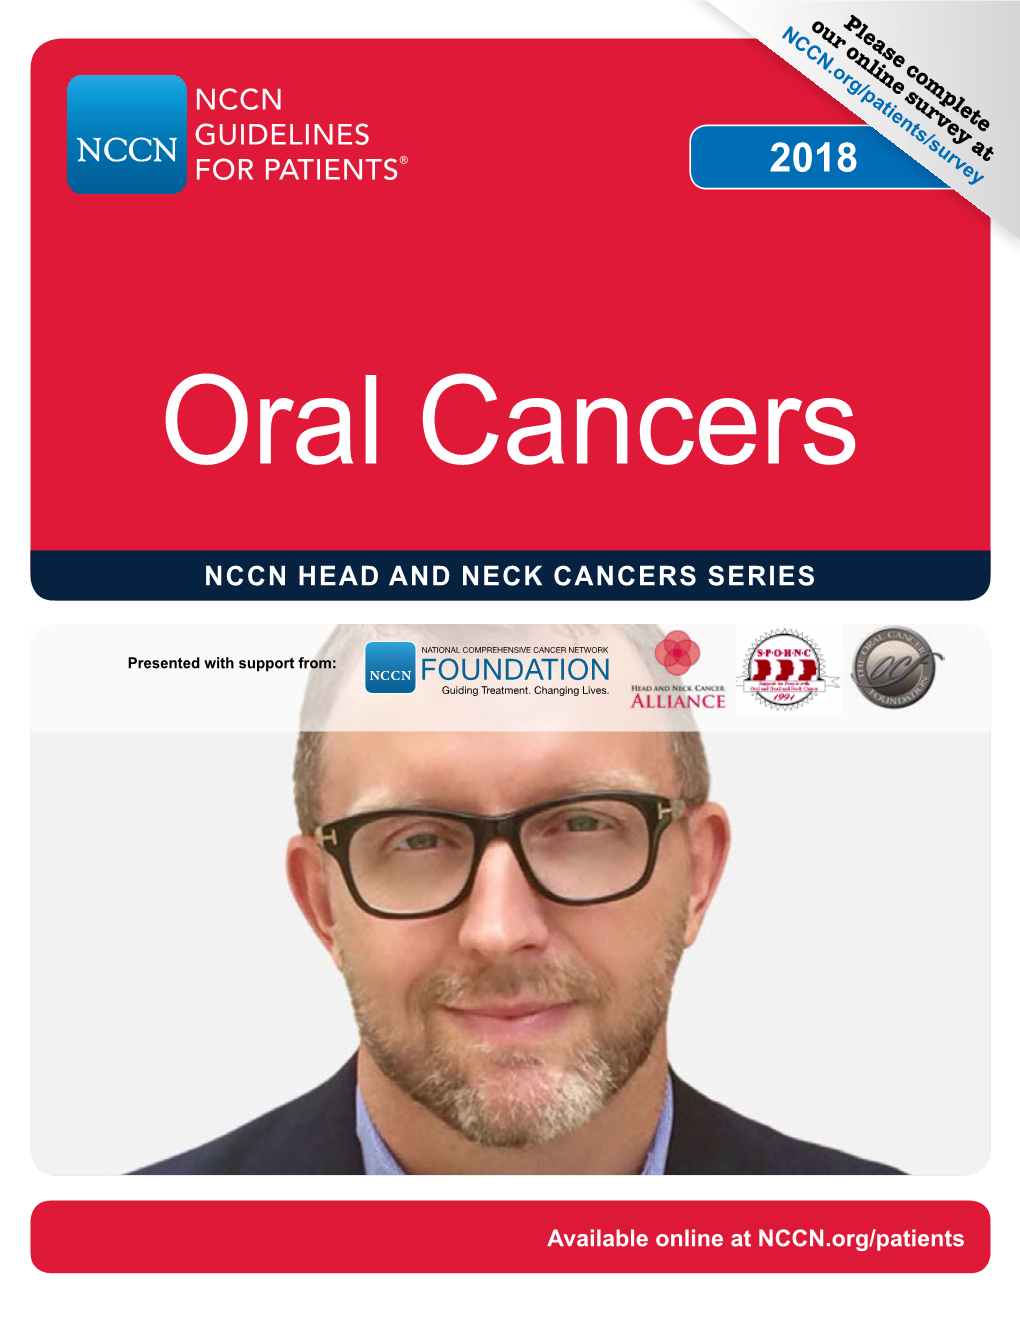 (NCCN): Oral Cancer